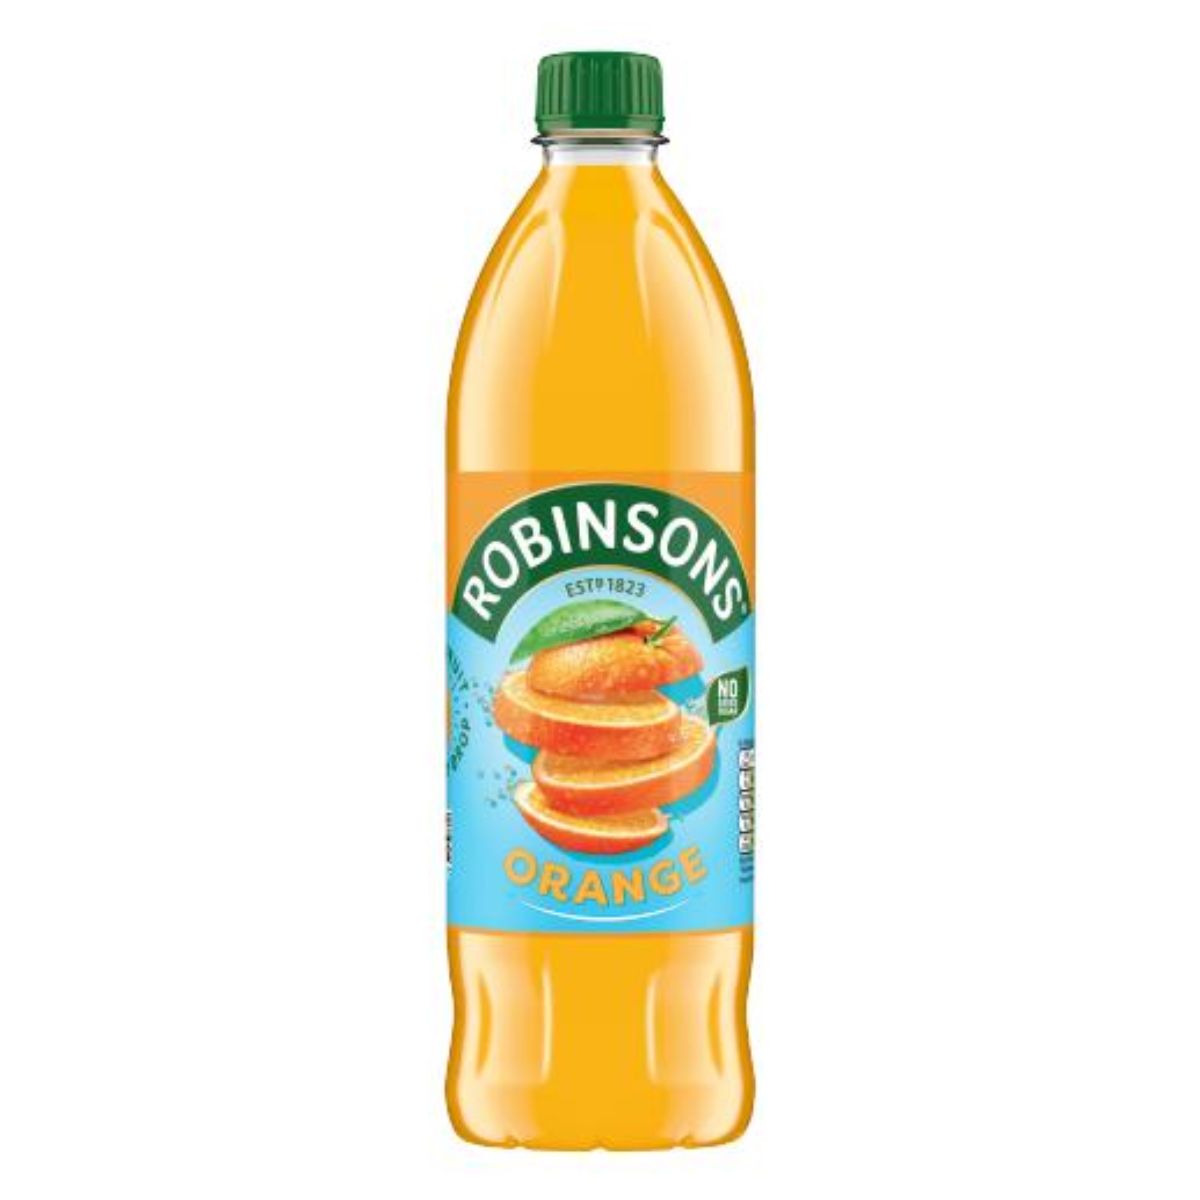 A bottle of Robinsons - Fruit Orange Juice - 1L.